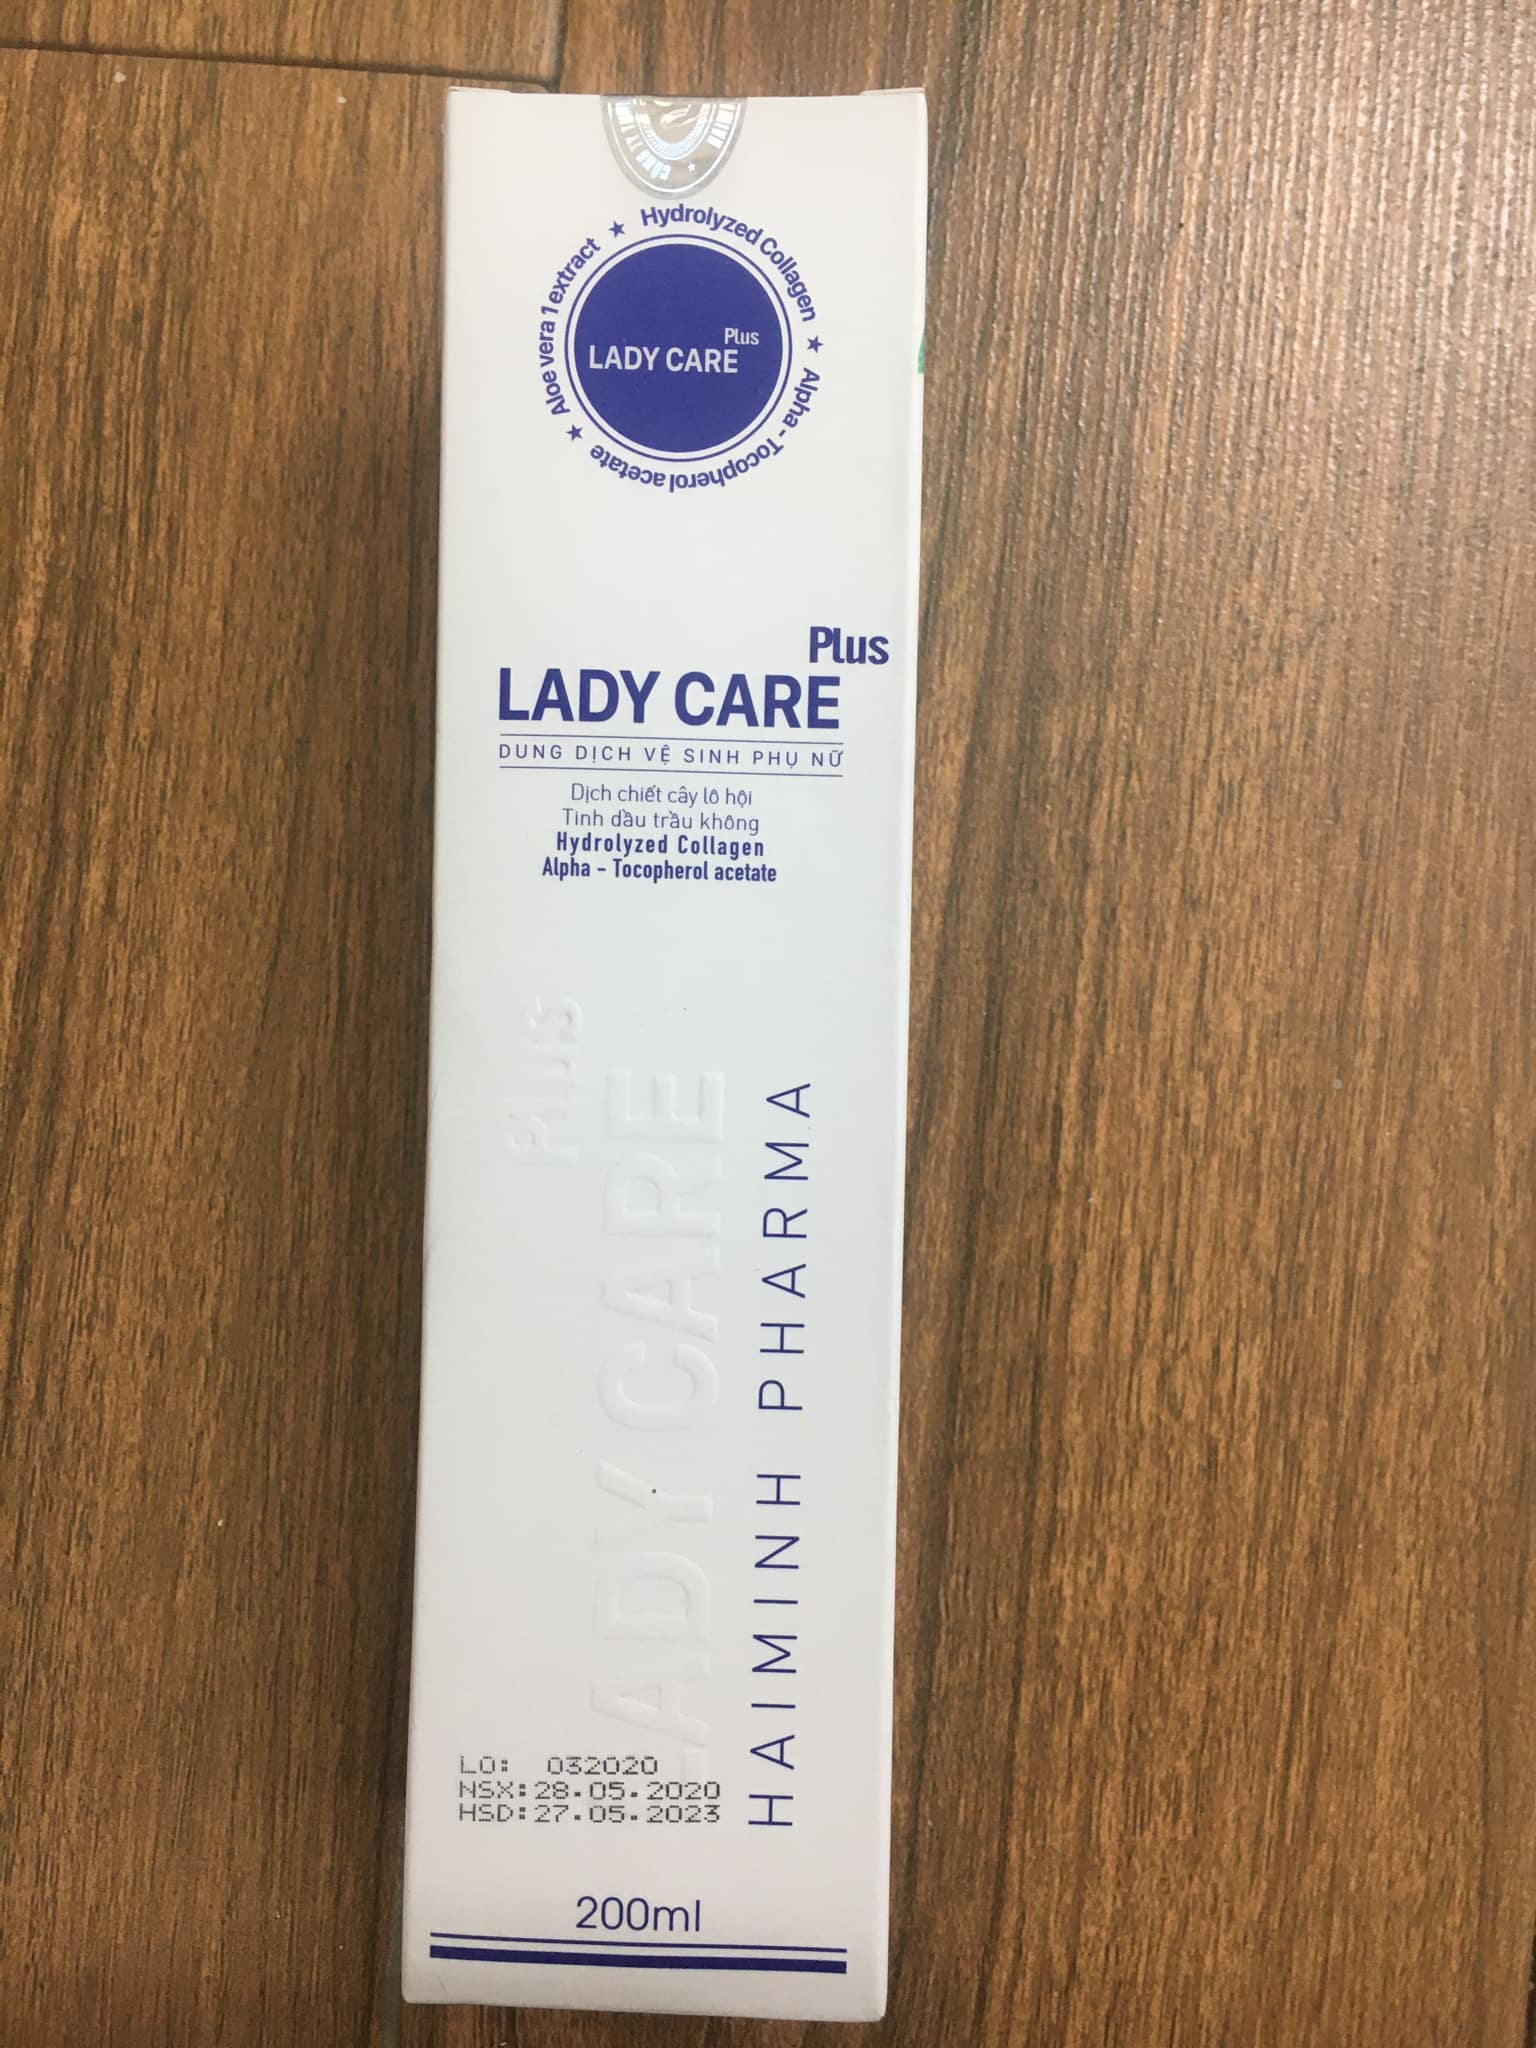 Lady Care Plus